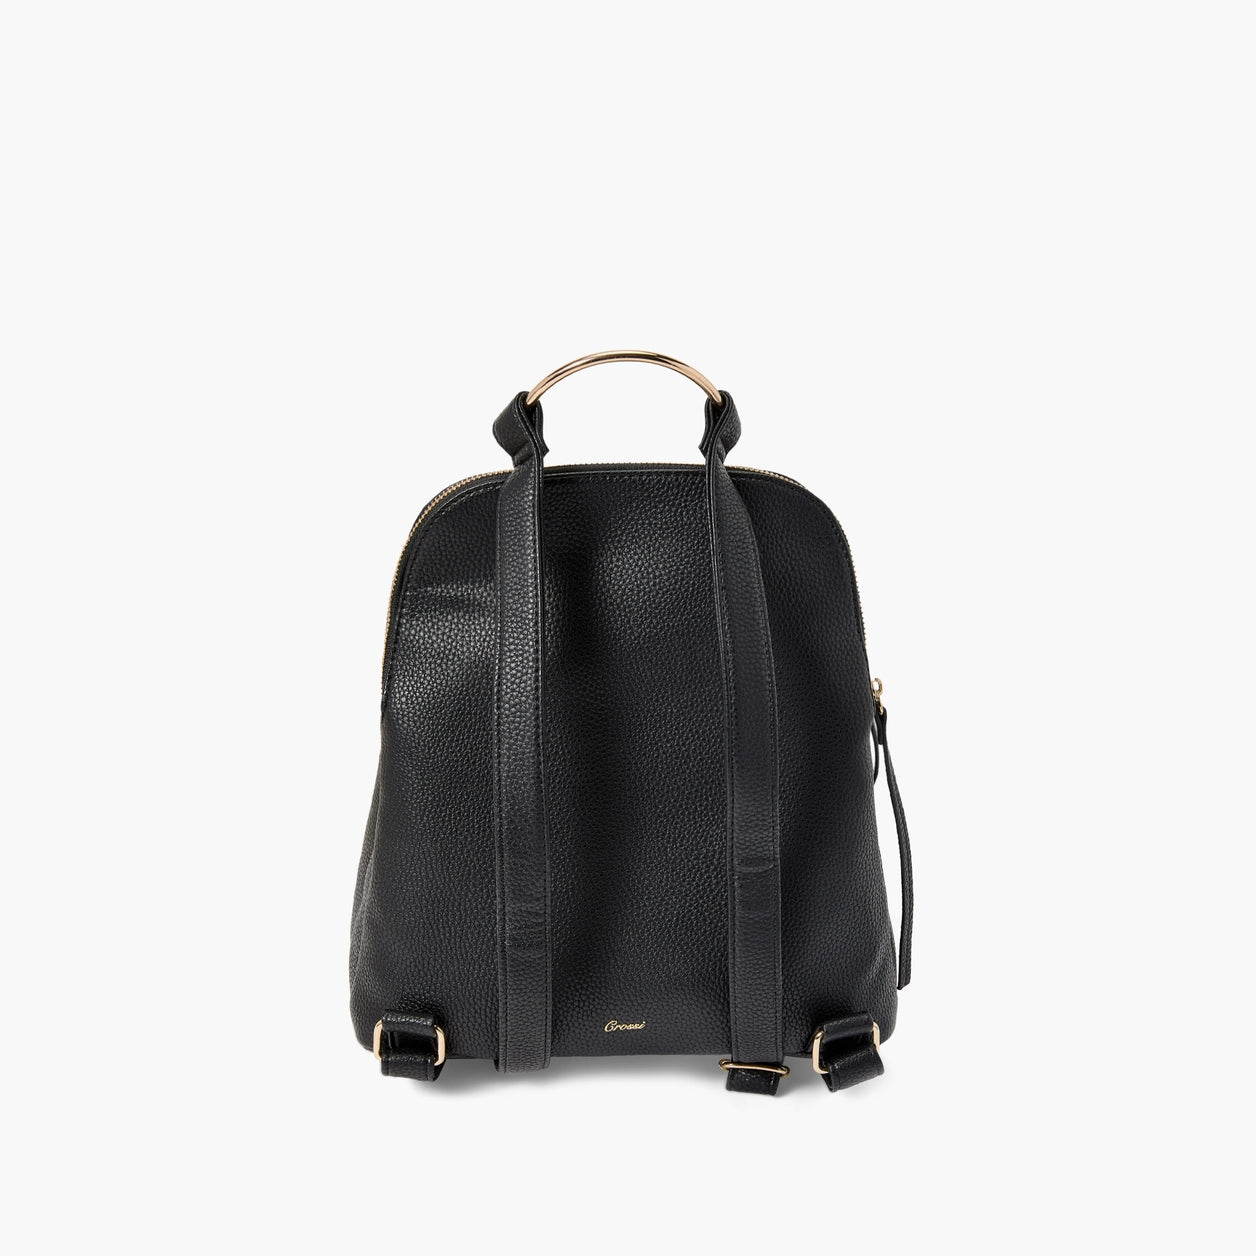 Jasmine Bowtie Backpack Handbag Black